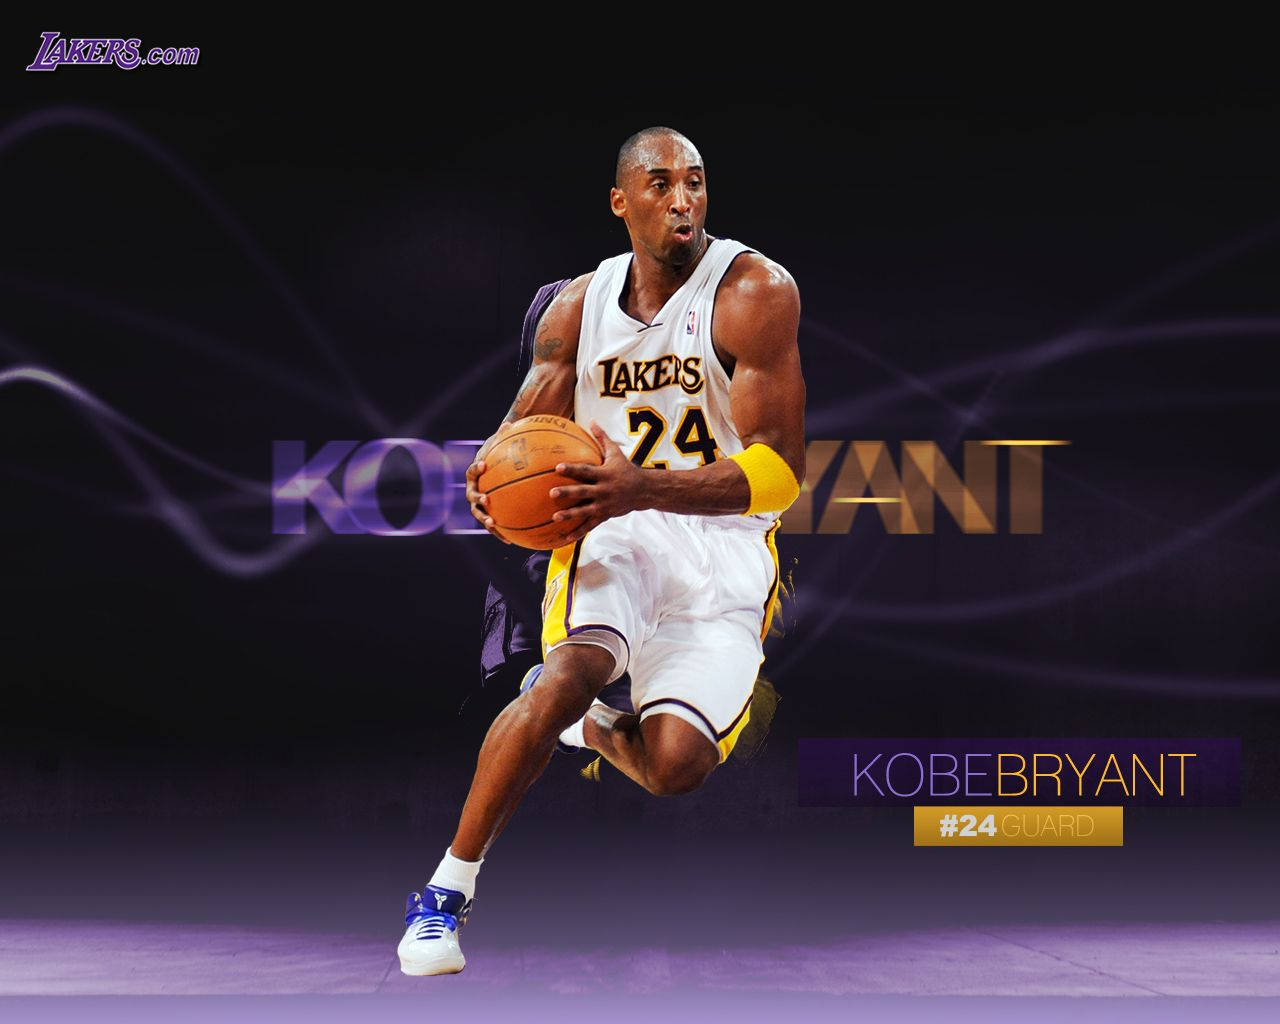 1280X1024 Kobe Bryant Wallpaper and Background